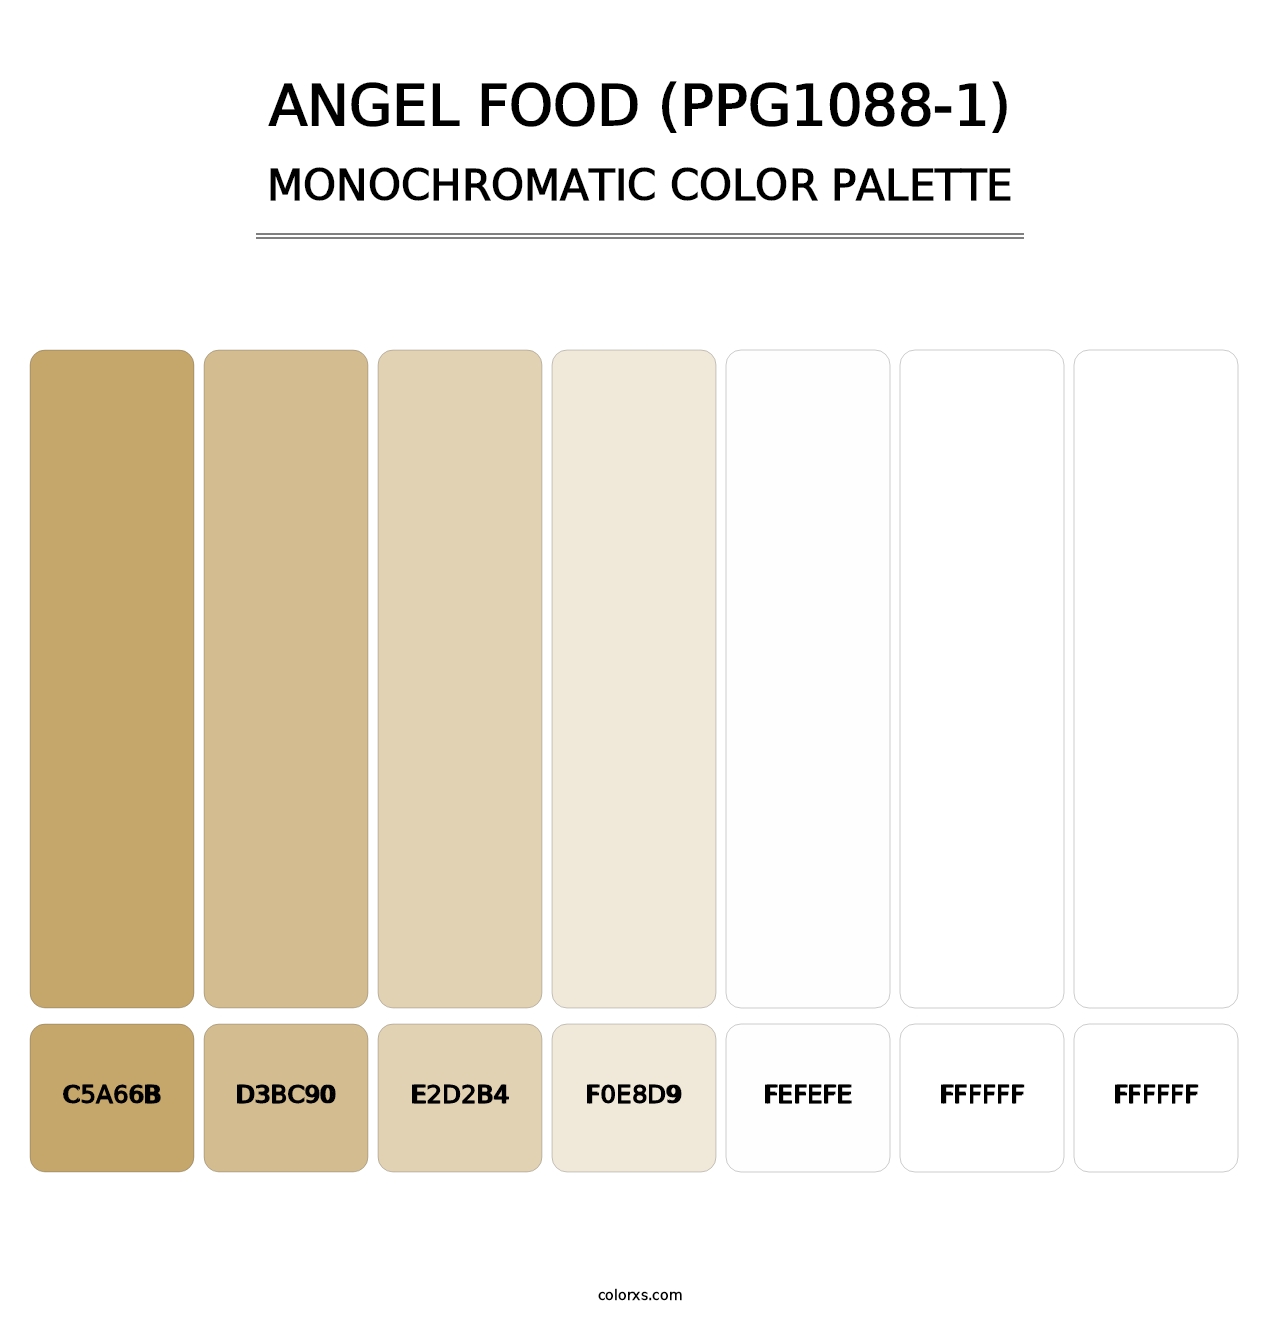 Angel Food (PPG1088-1) - Monochromatic Color Palette